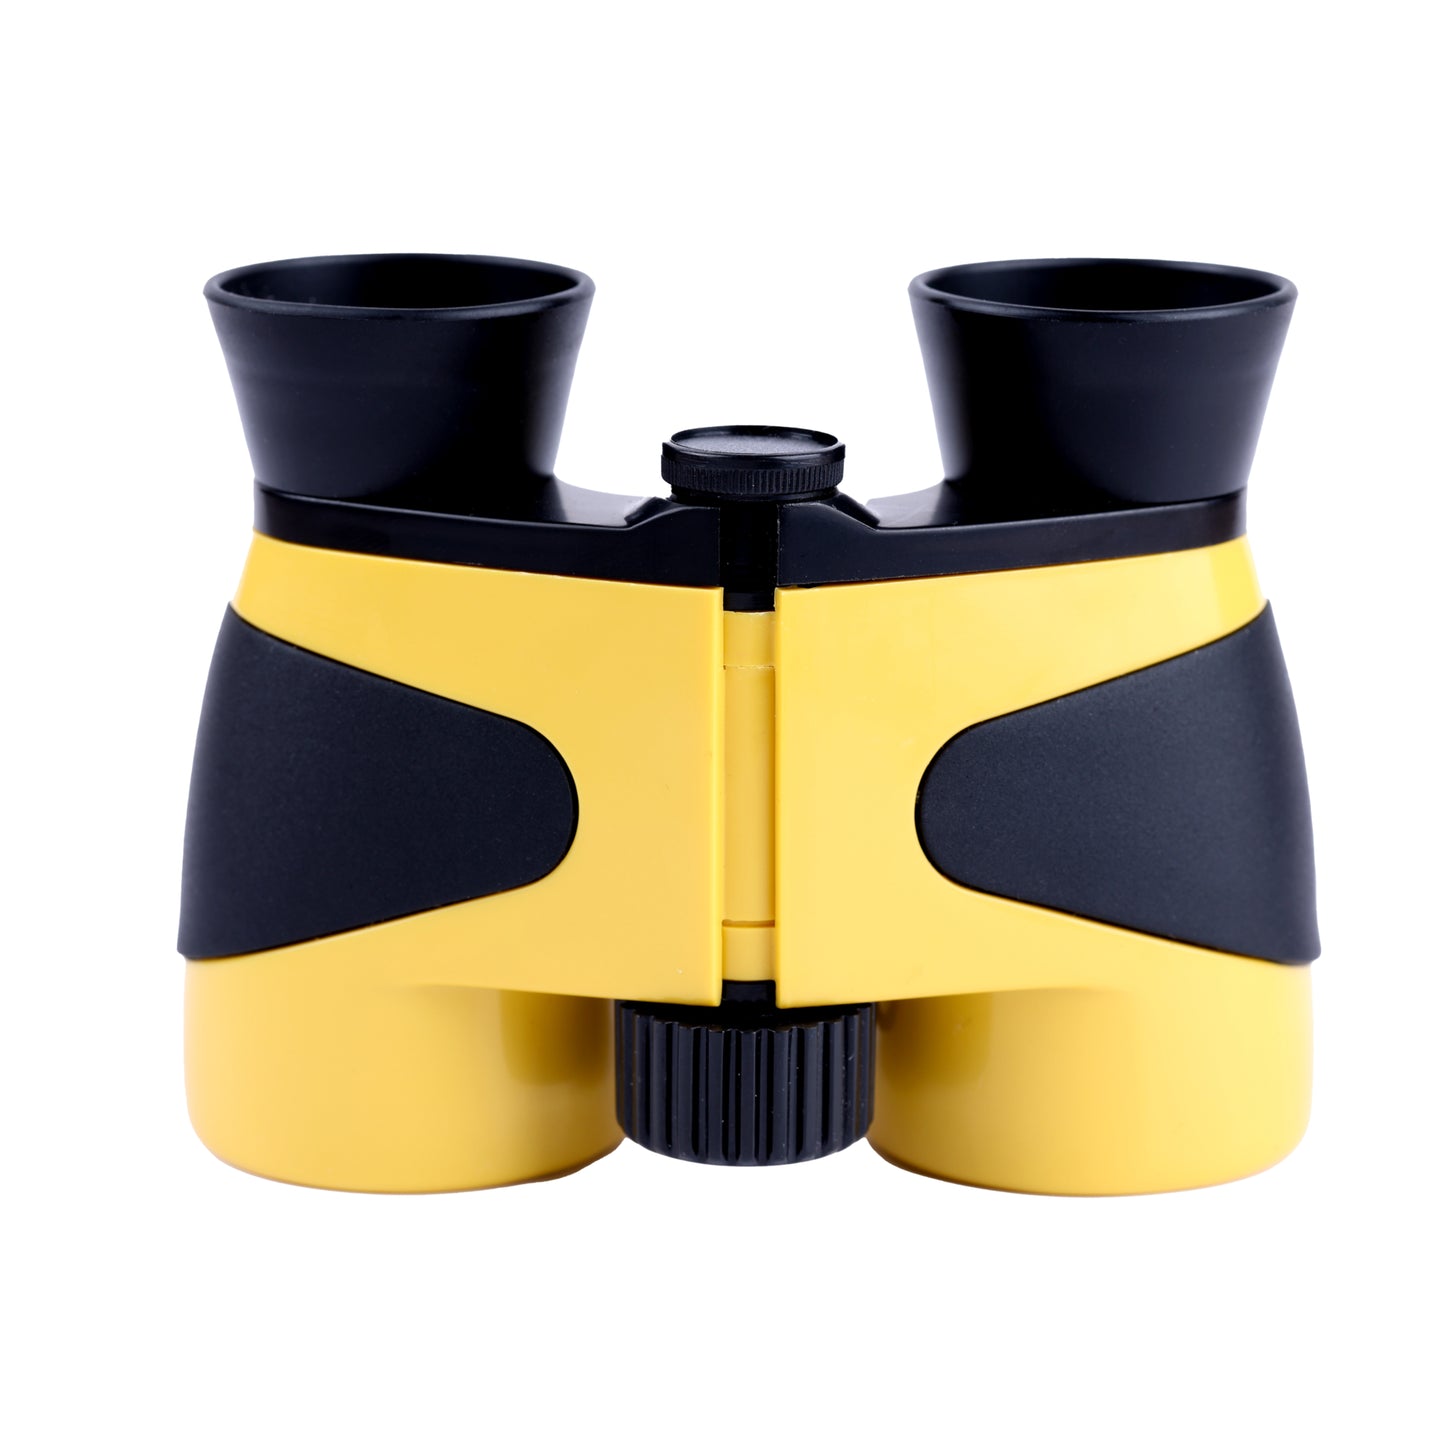 Binoculars for Kids